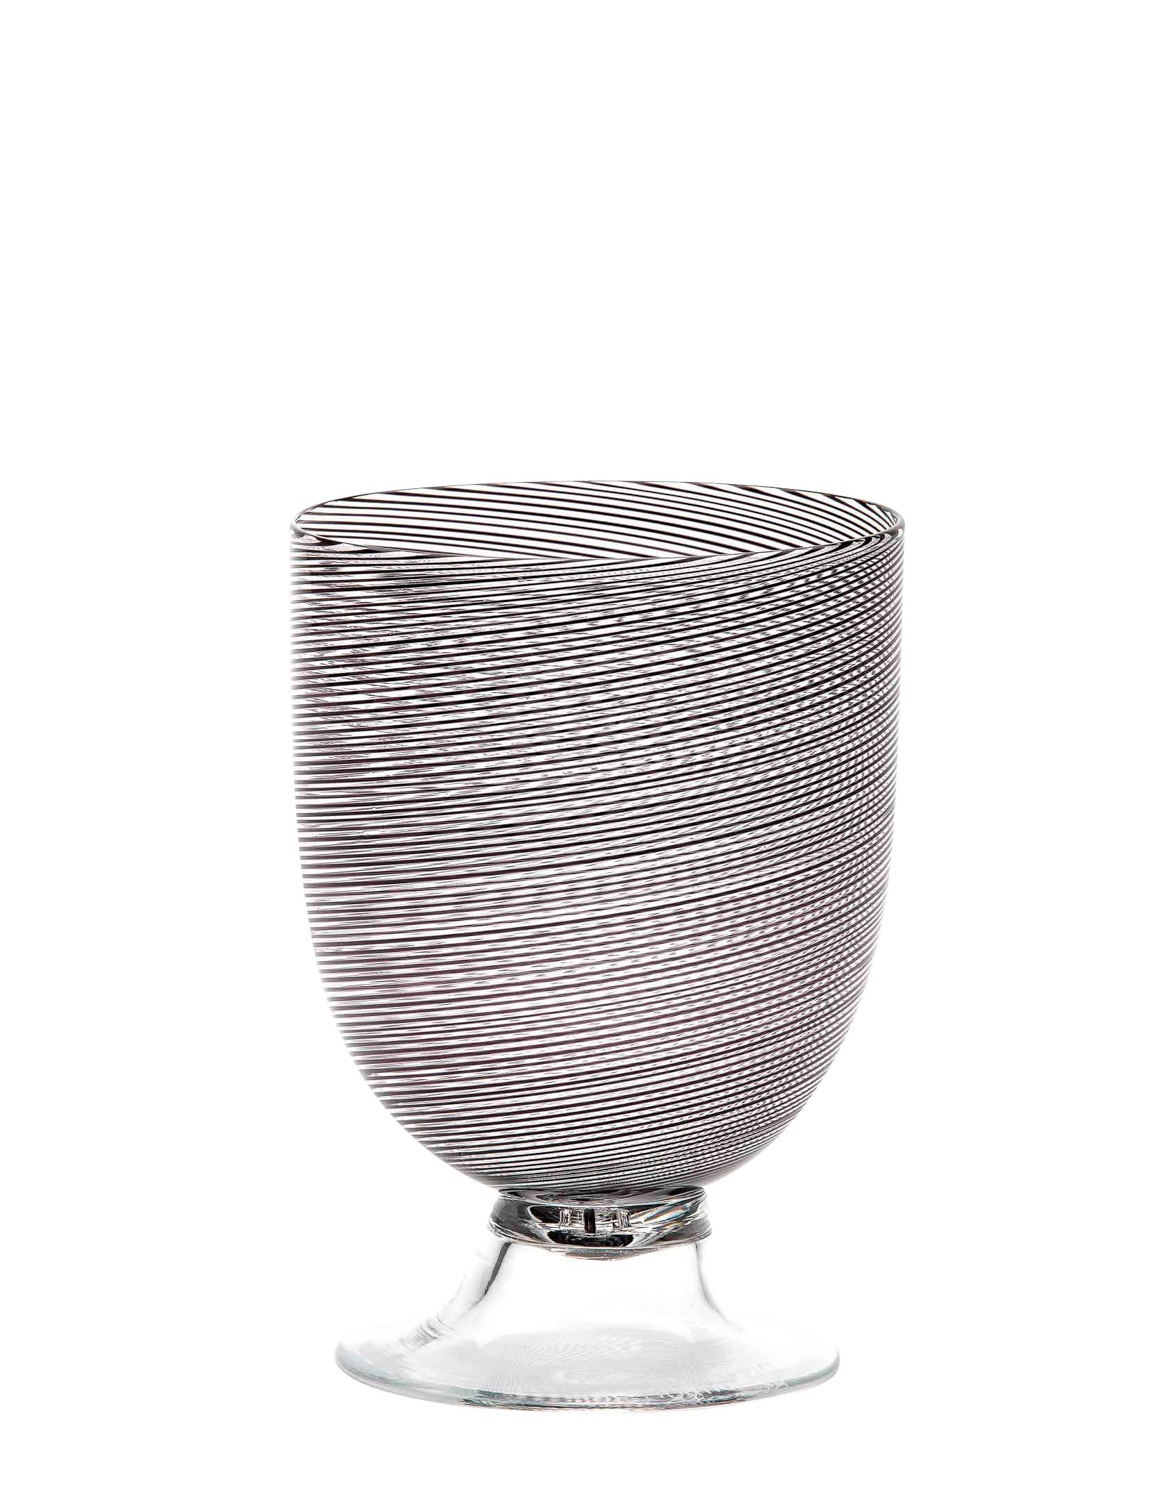 black and white horizontal striped hurricane vase by LagunaB